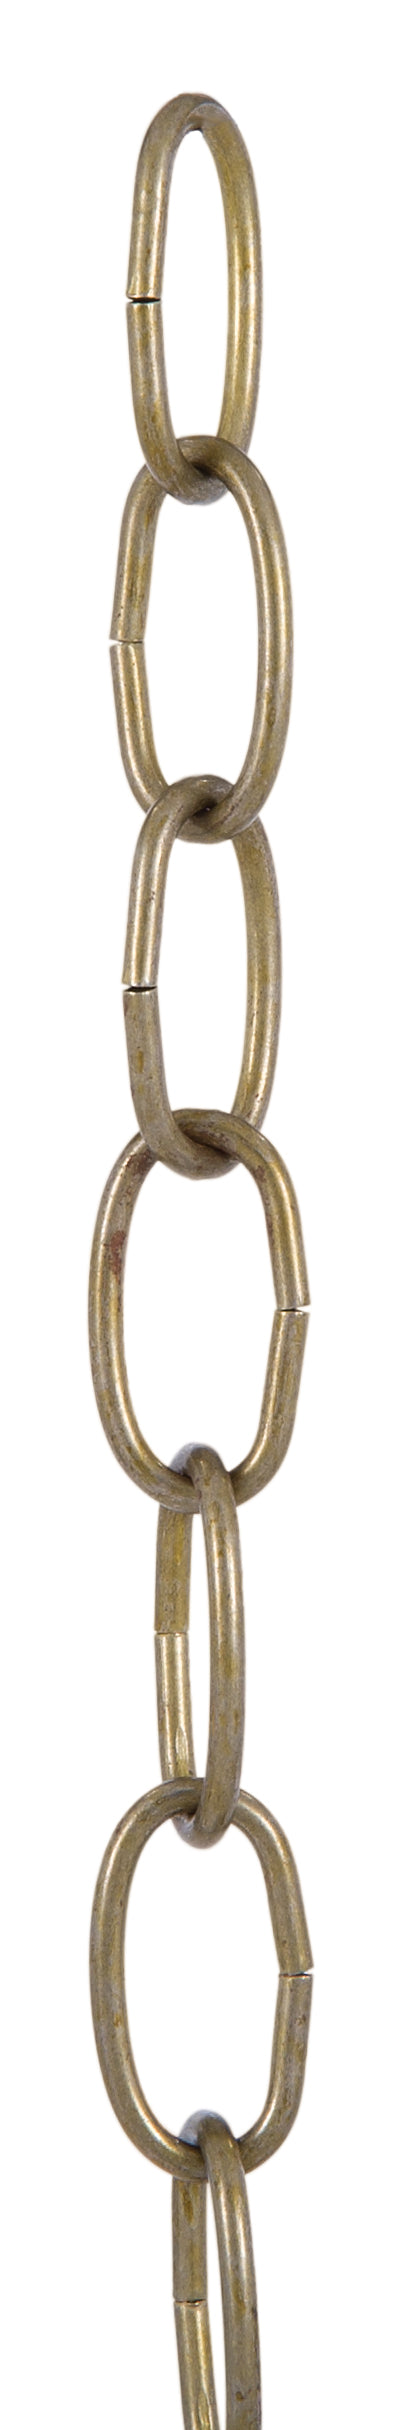 Antique Brass Finish, 8 Gauge Oval Steel Chain